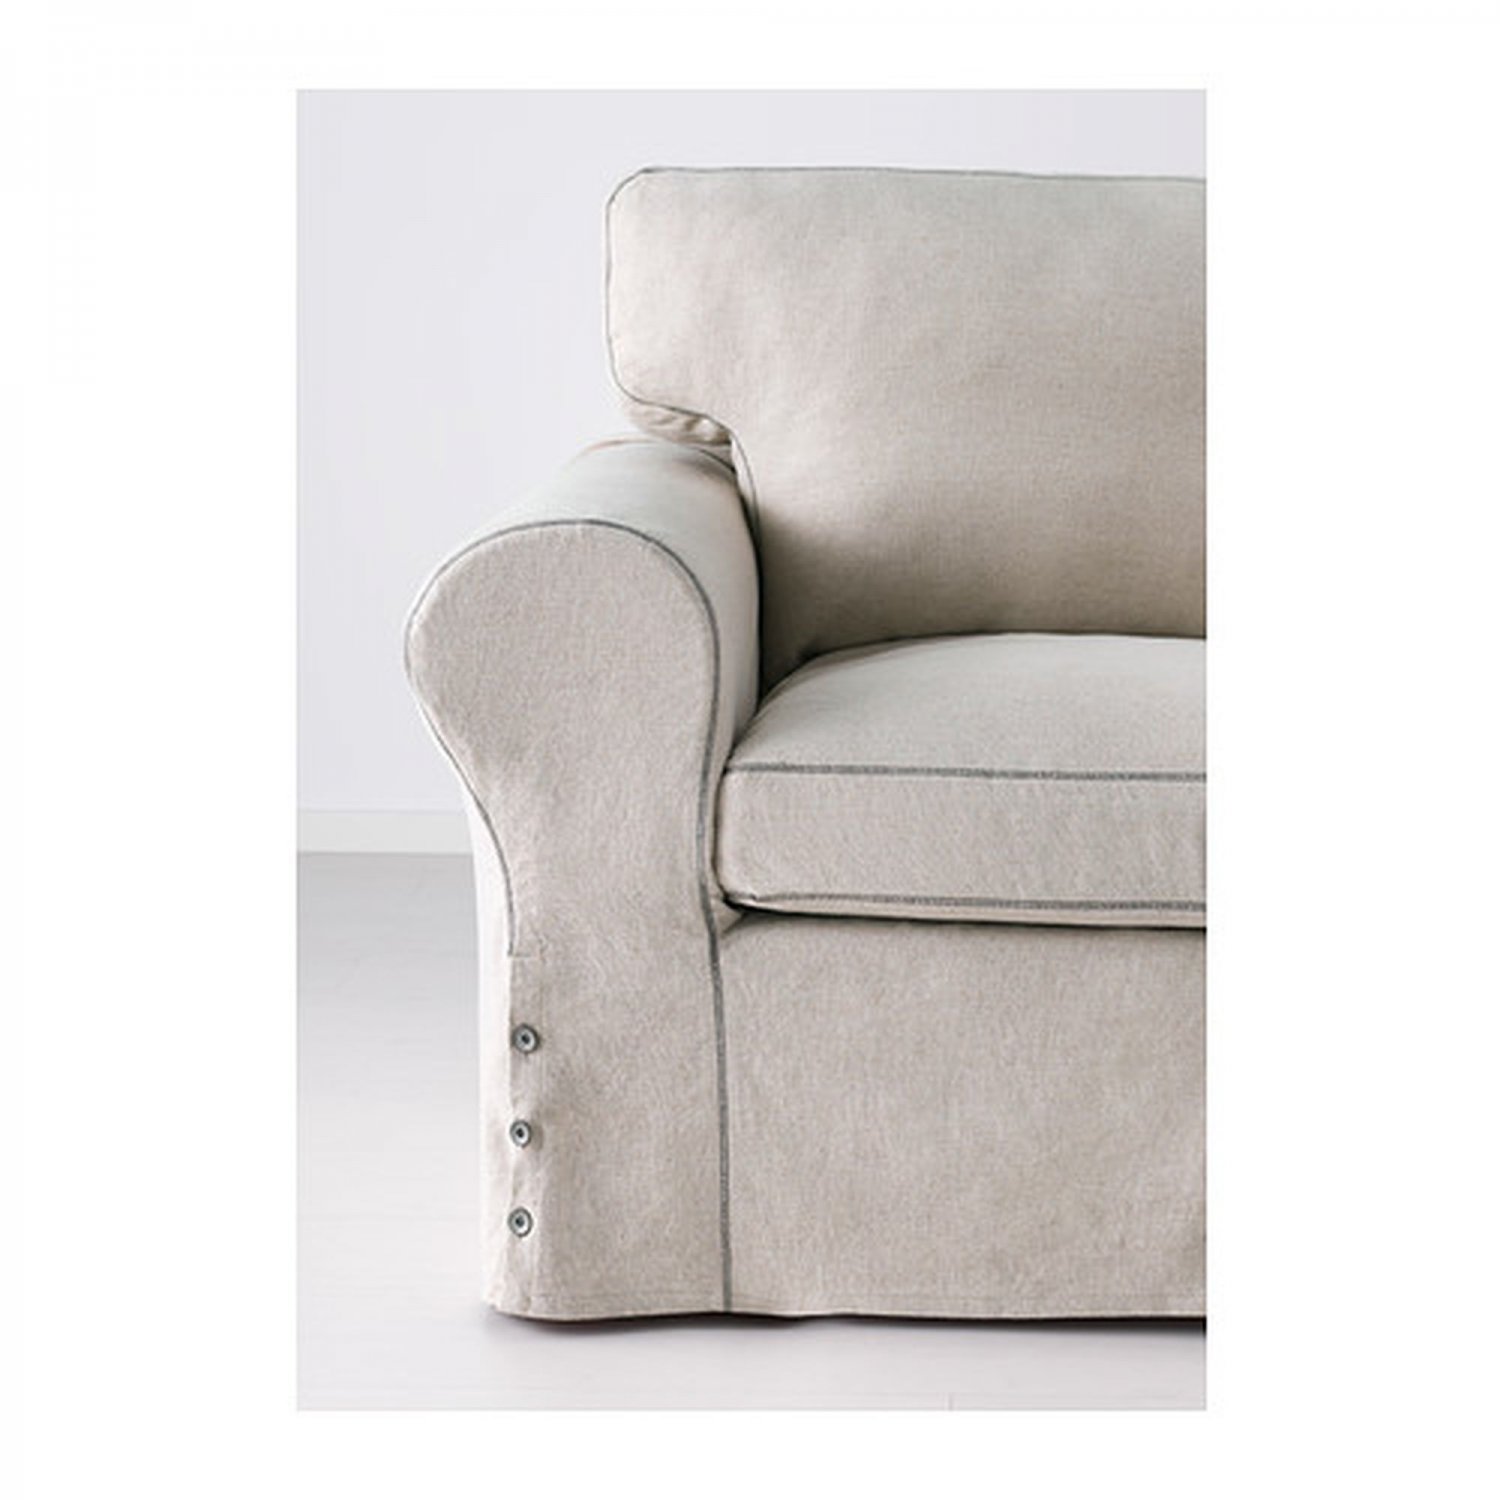 IKEA EKTORP Armchair COVER Chair Slipcover RISANE NATURAL ...